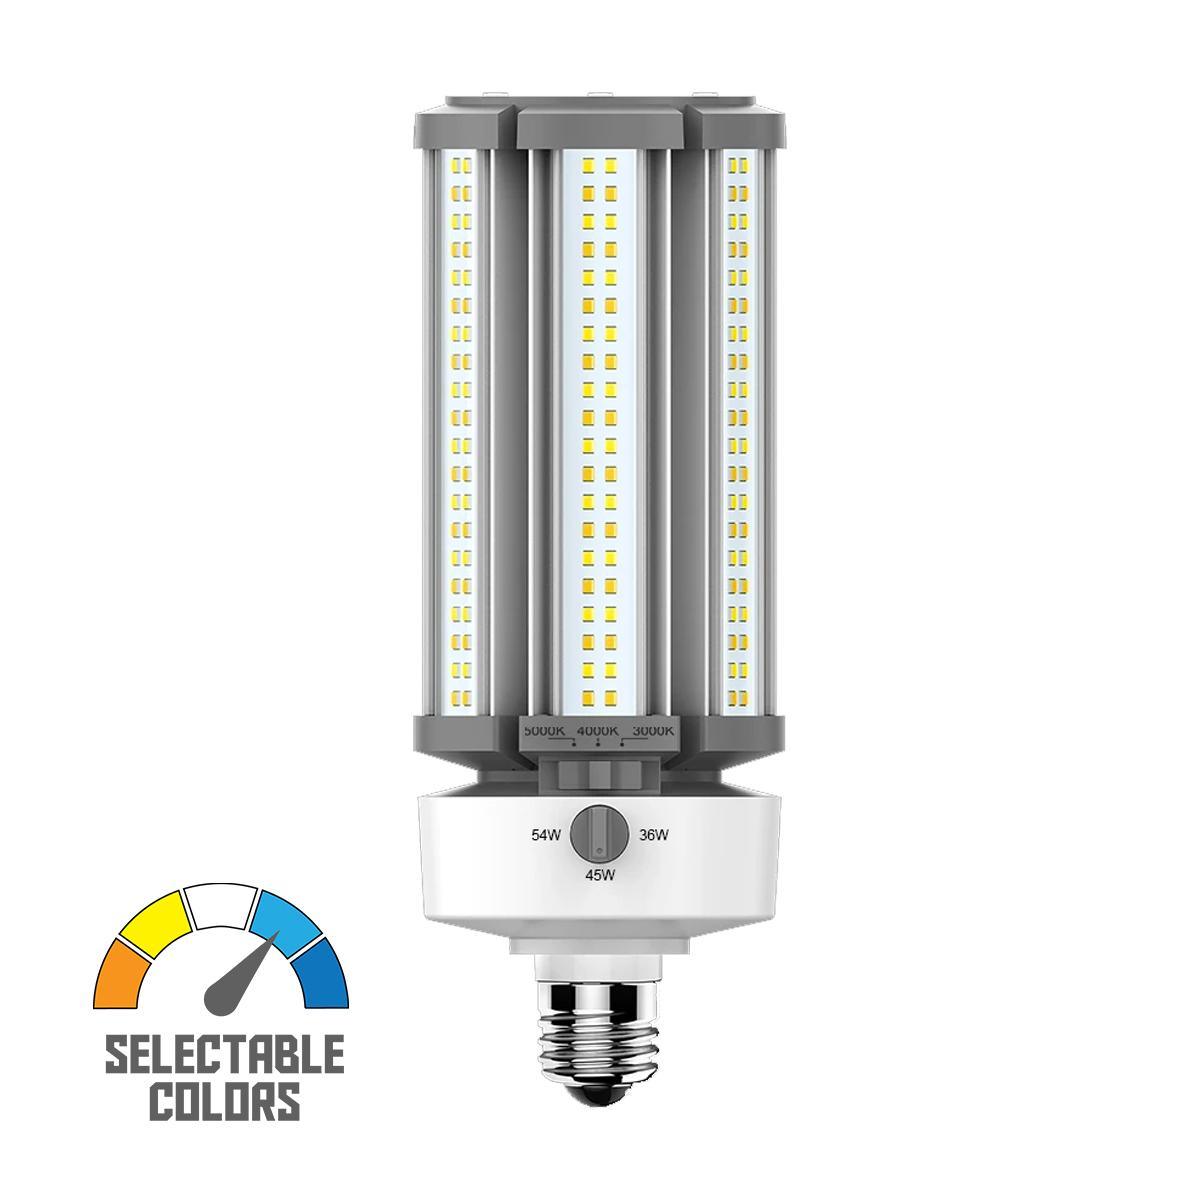 LED Corn Retrofit Lamp, 54W, 7830 Lumens, Field Adjustable, 30K/40K/50K, E26 Base, 120-277V - Bees Lighting